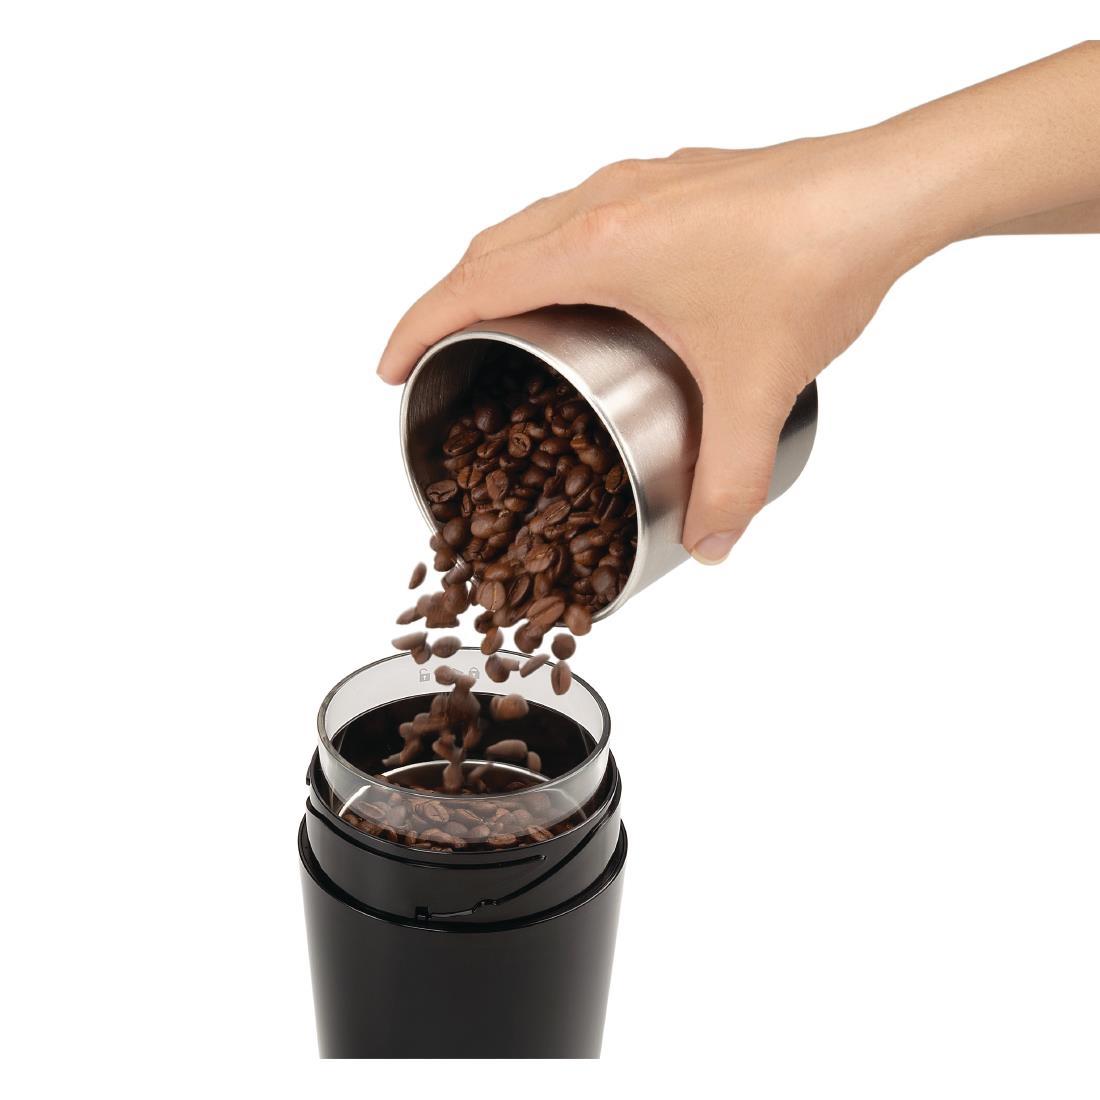 DeLonghi Coffee Bean Grinder KG200 - FS137  - 2